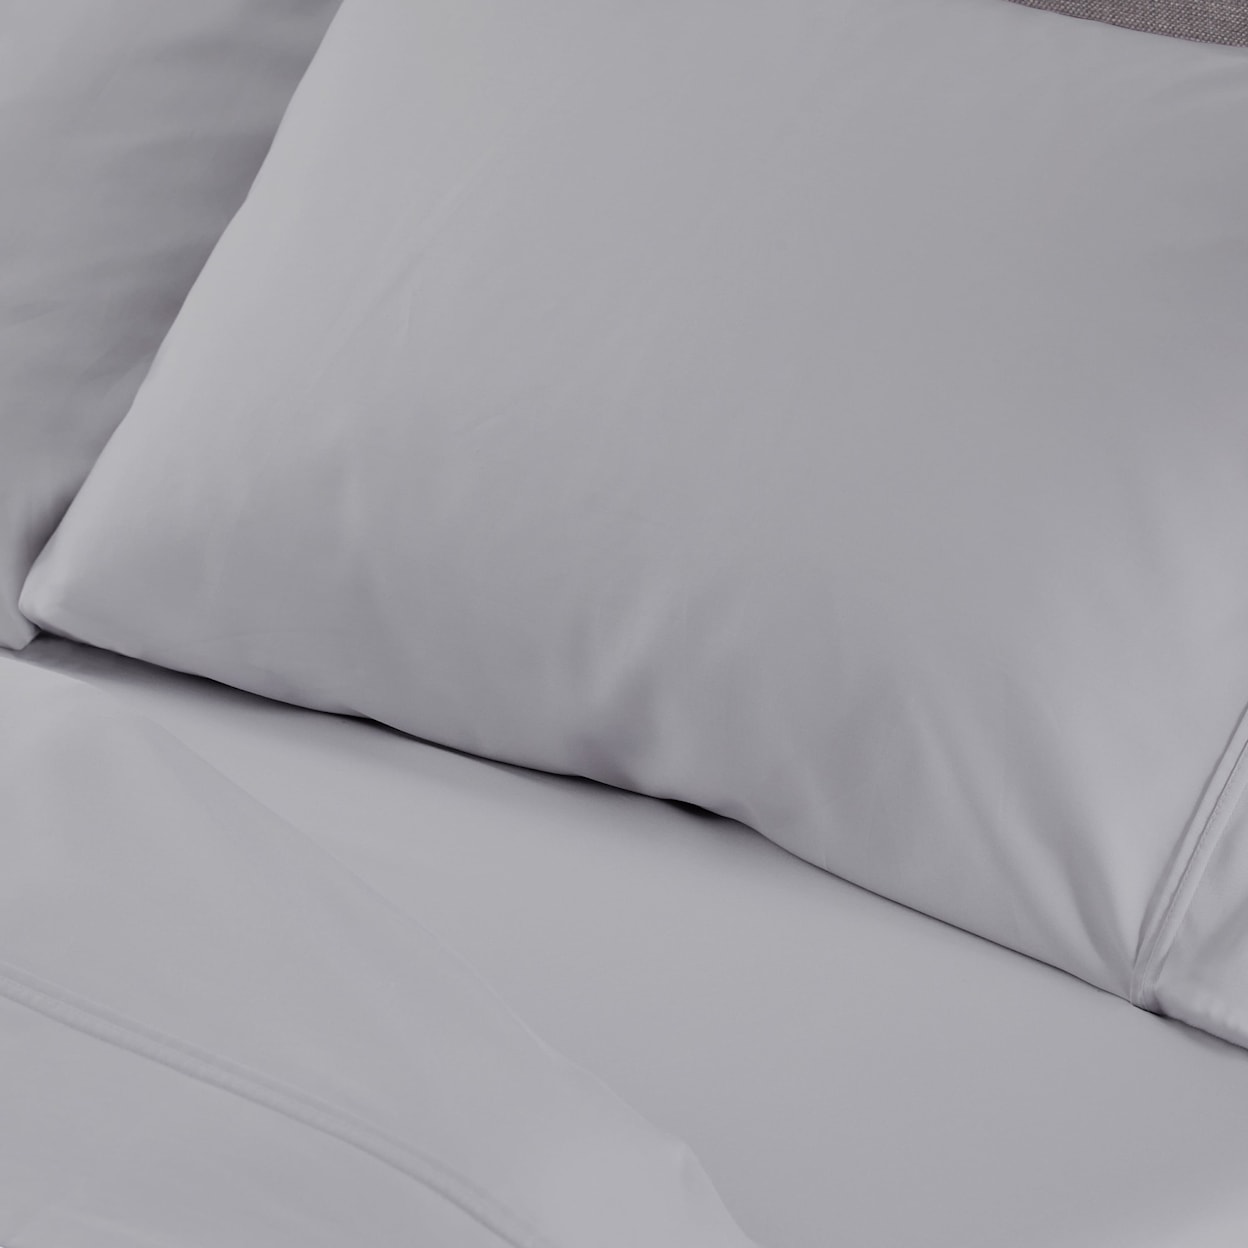 Bedgear Hyper Cotton Sheets Sheet Set,Grey, Twin